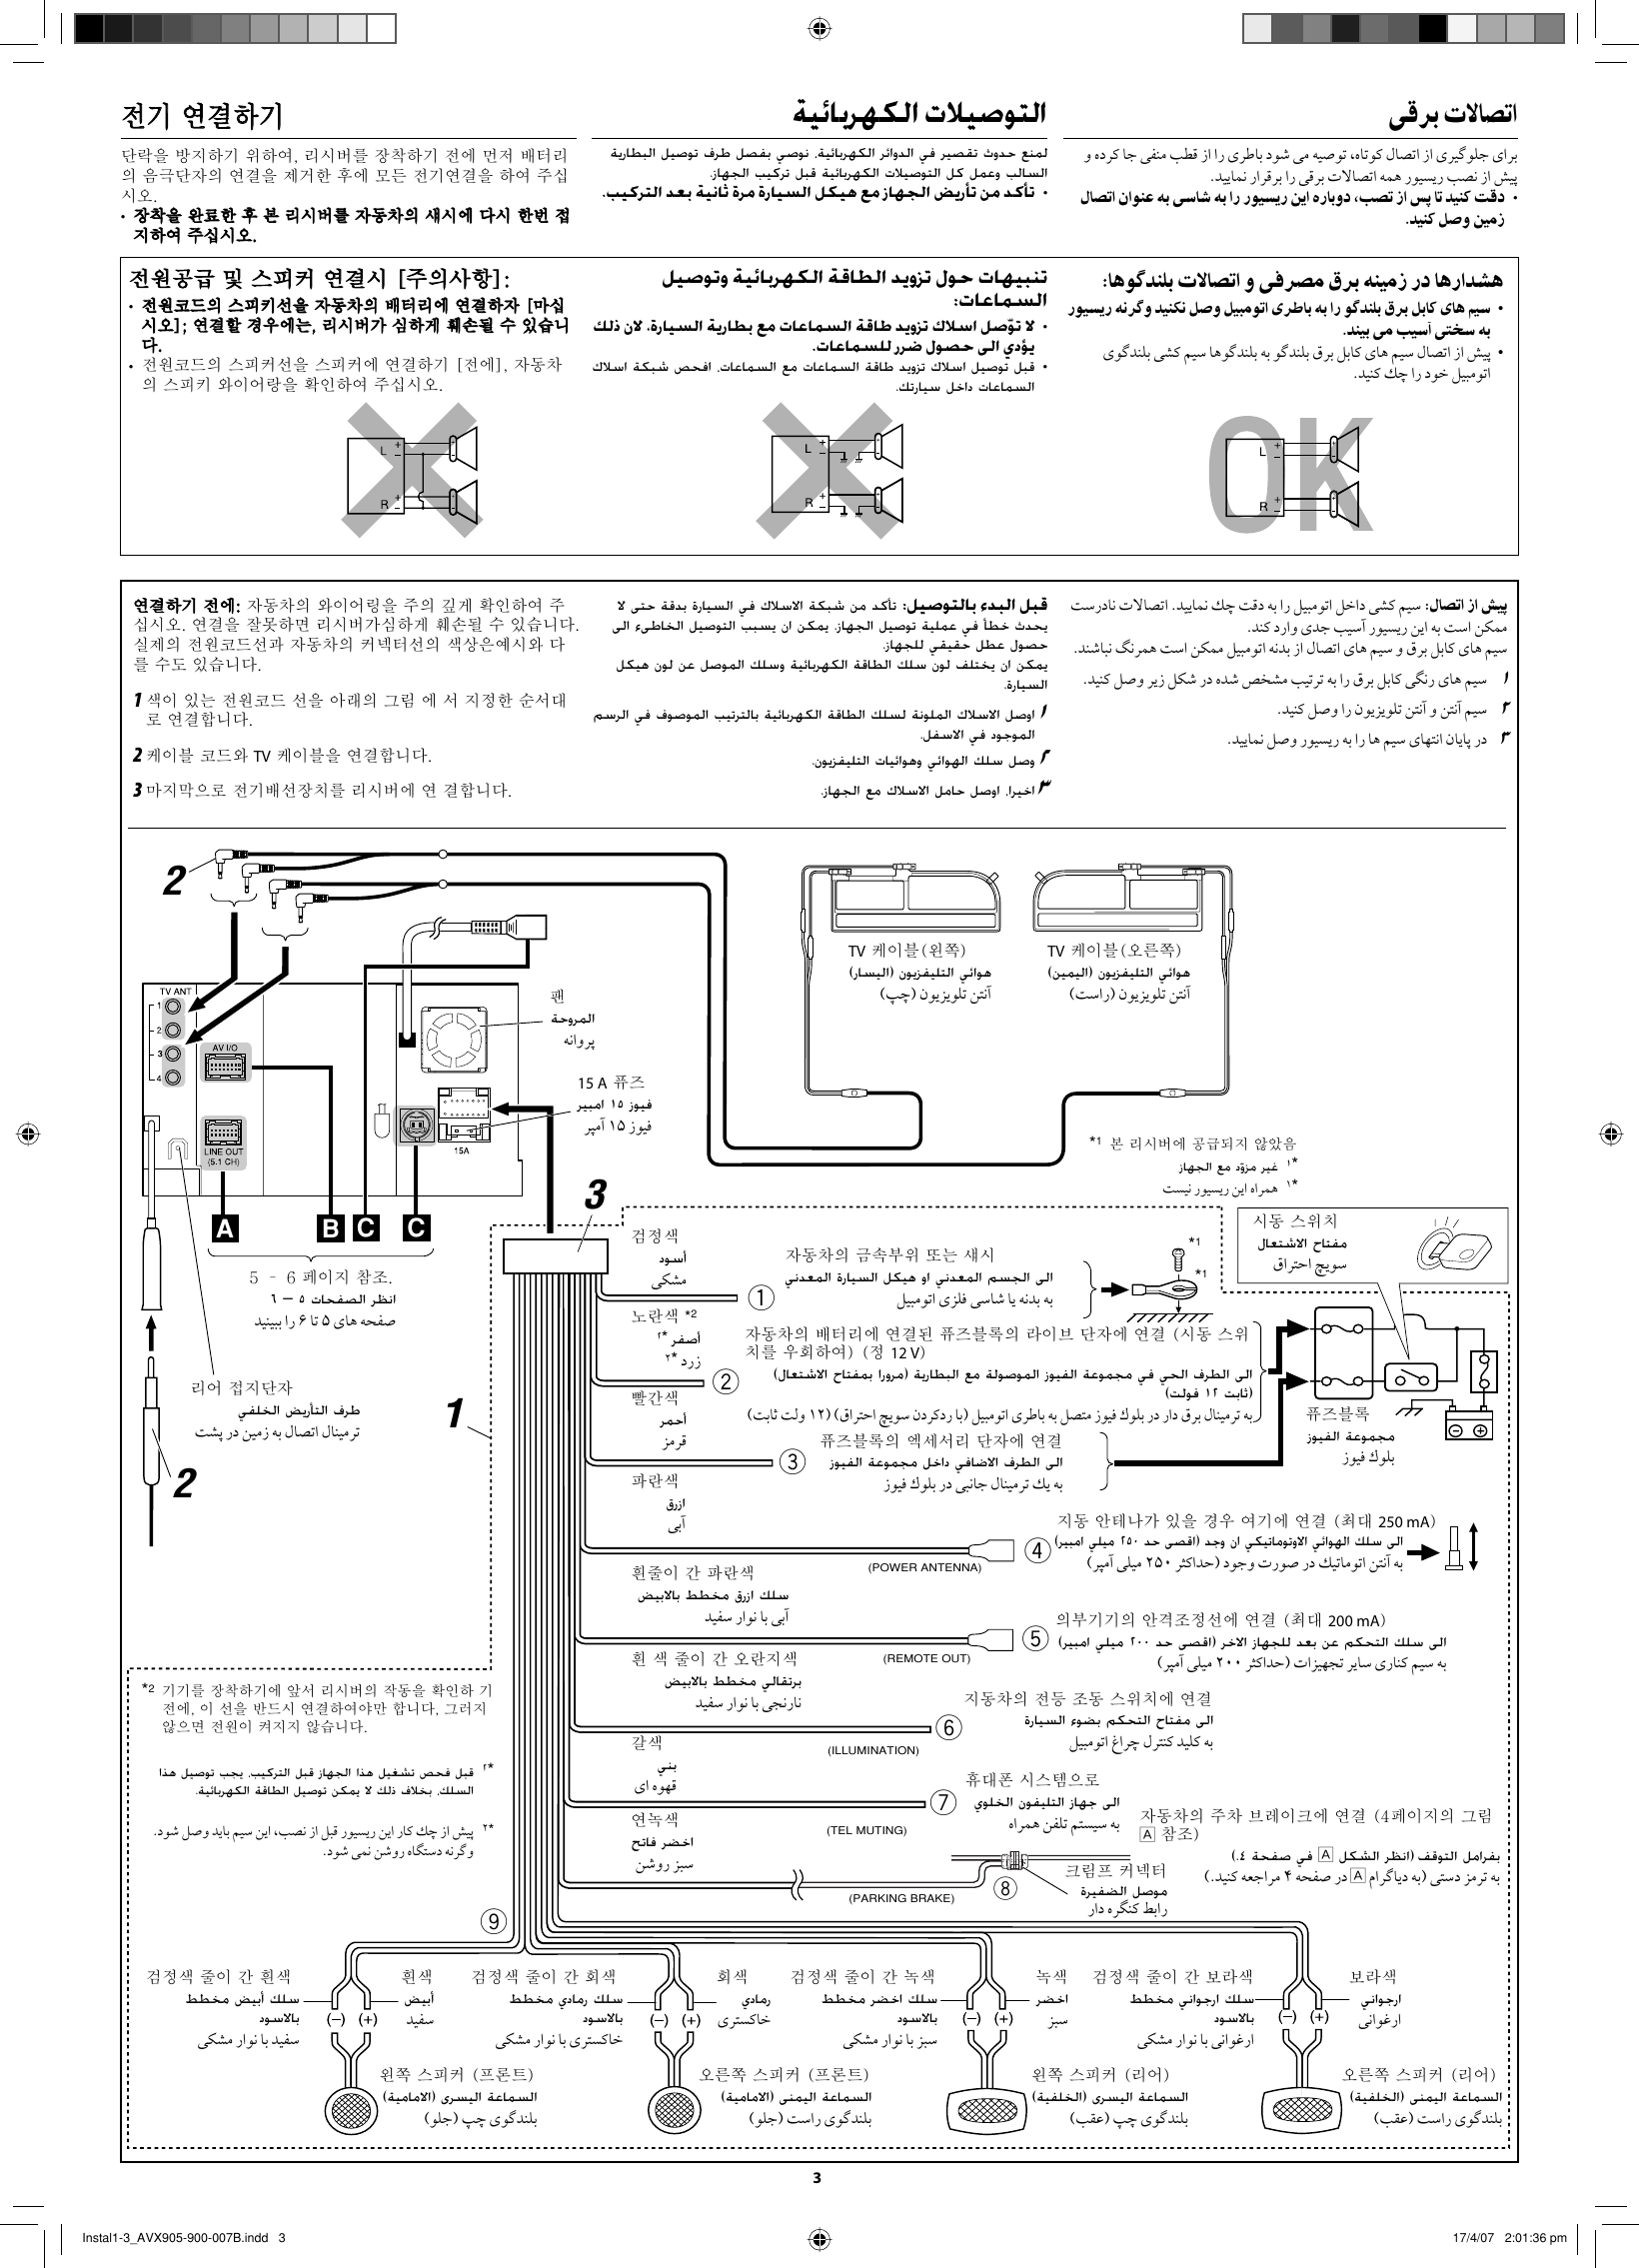 Page 3 of 6 - JVC KW-AVX900U KW-AVX905/KW-AVX900[U] User Manual INSTALLATION (Asia) LVT1670-007B